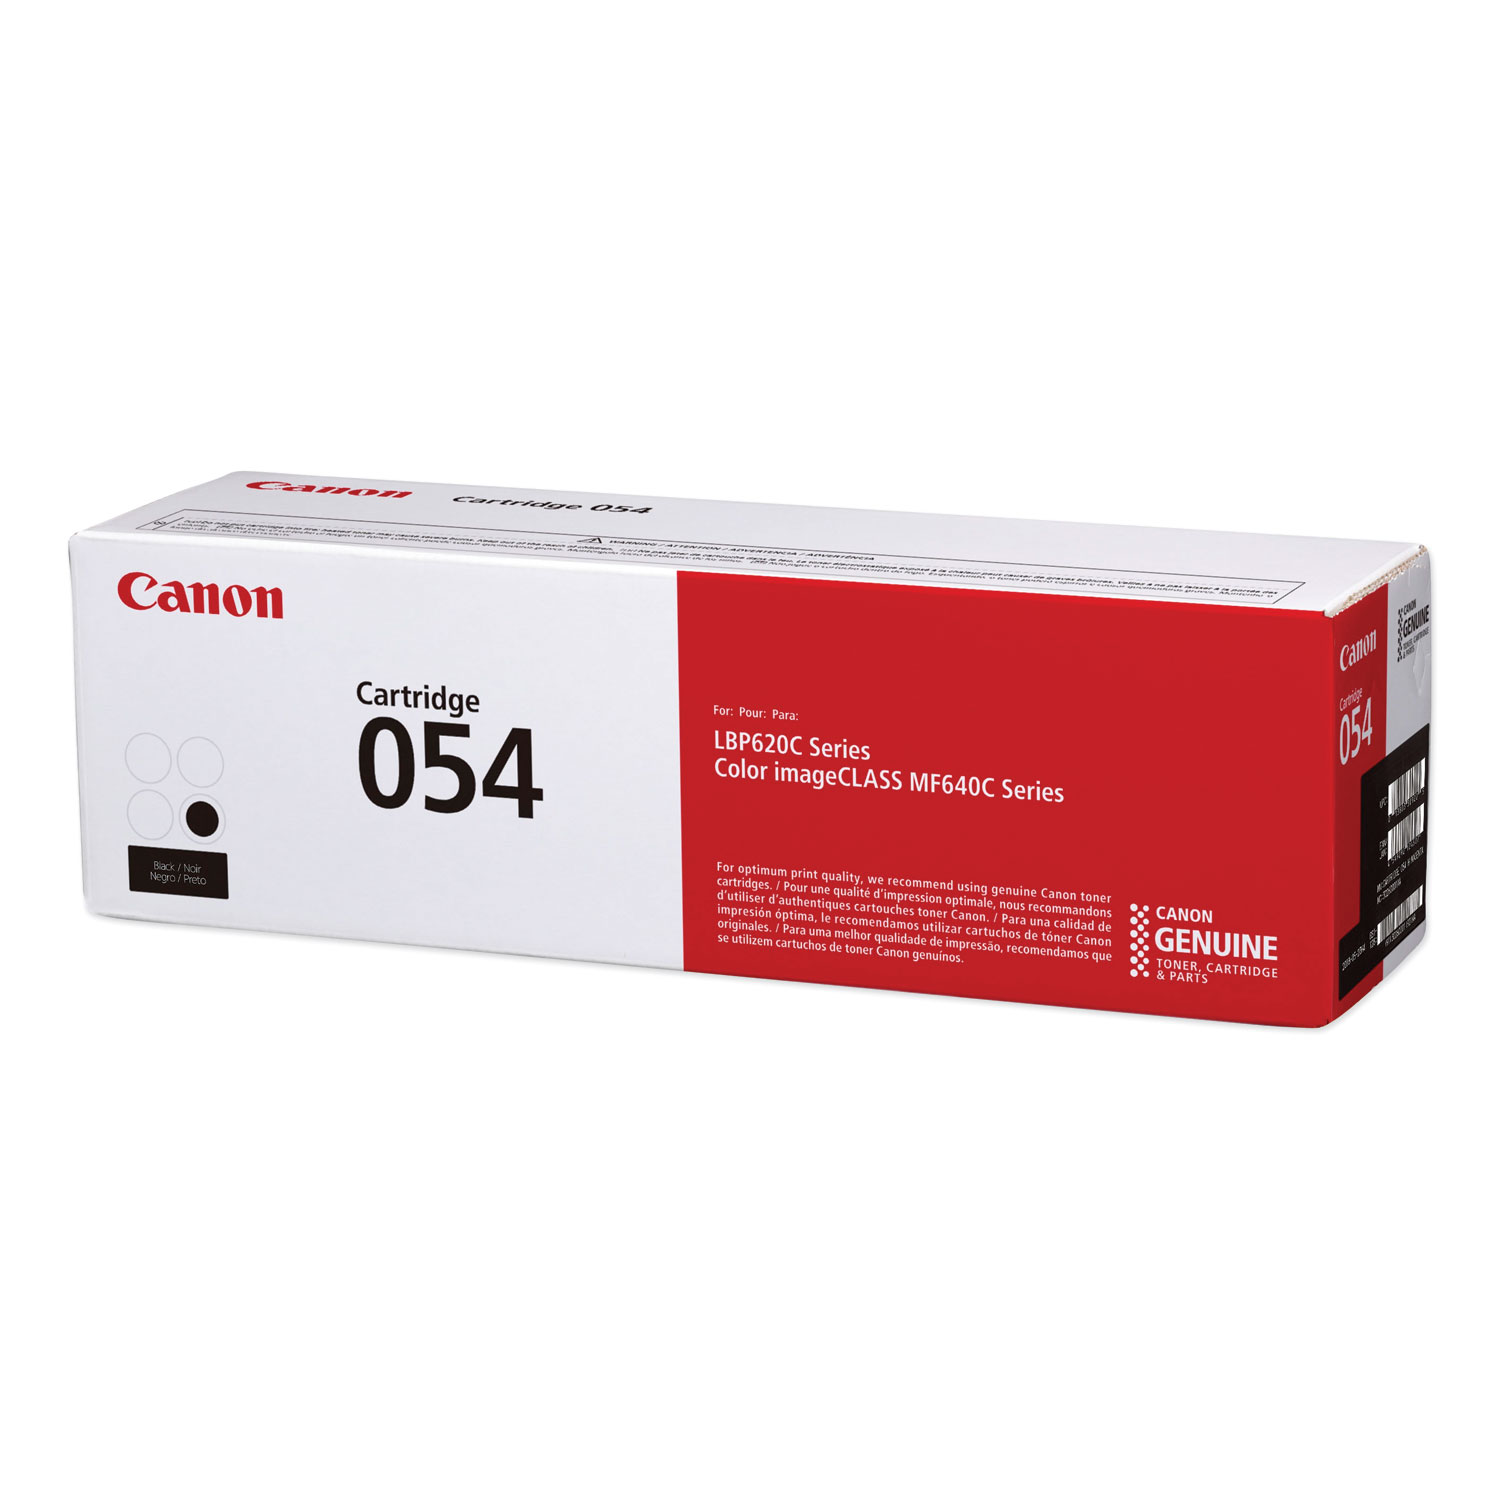  Canon 3024C001 3024C001 (054) Toner, 1,500 Page-Yield, Black (CNM3024C001) 